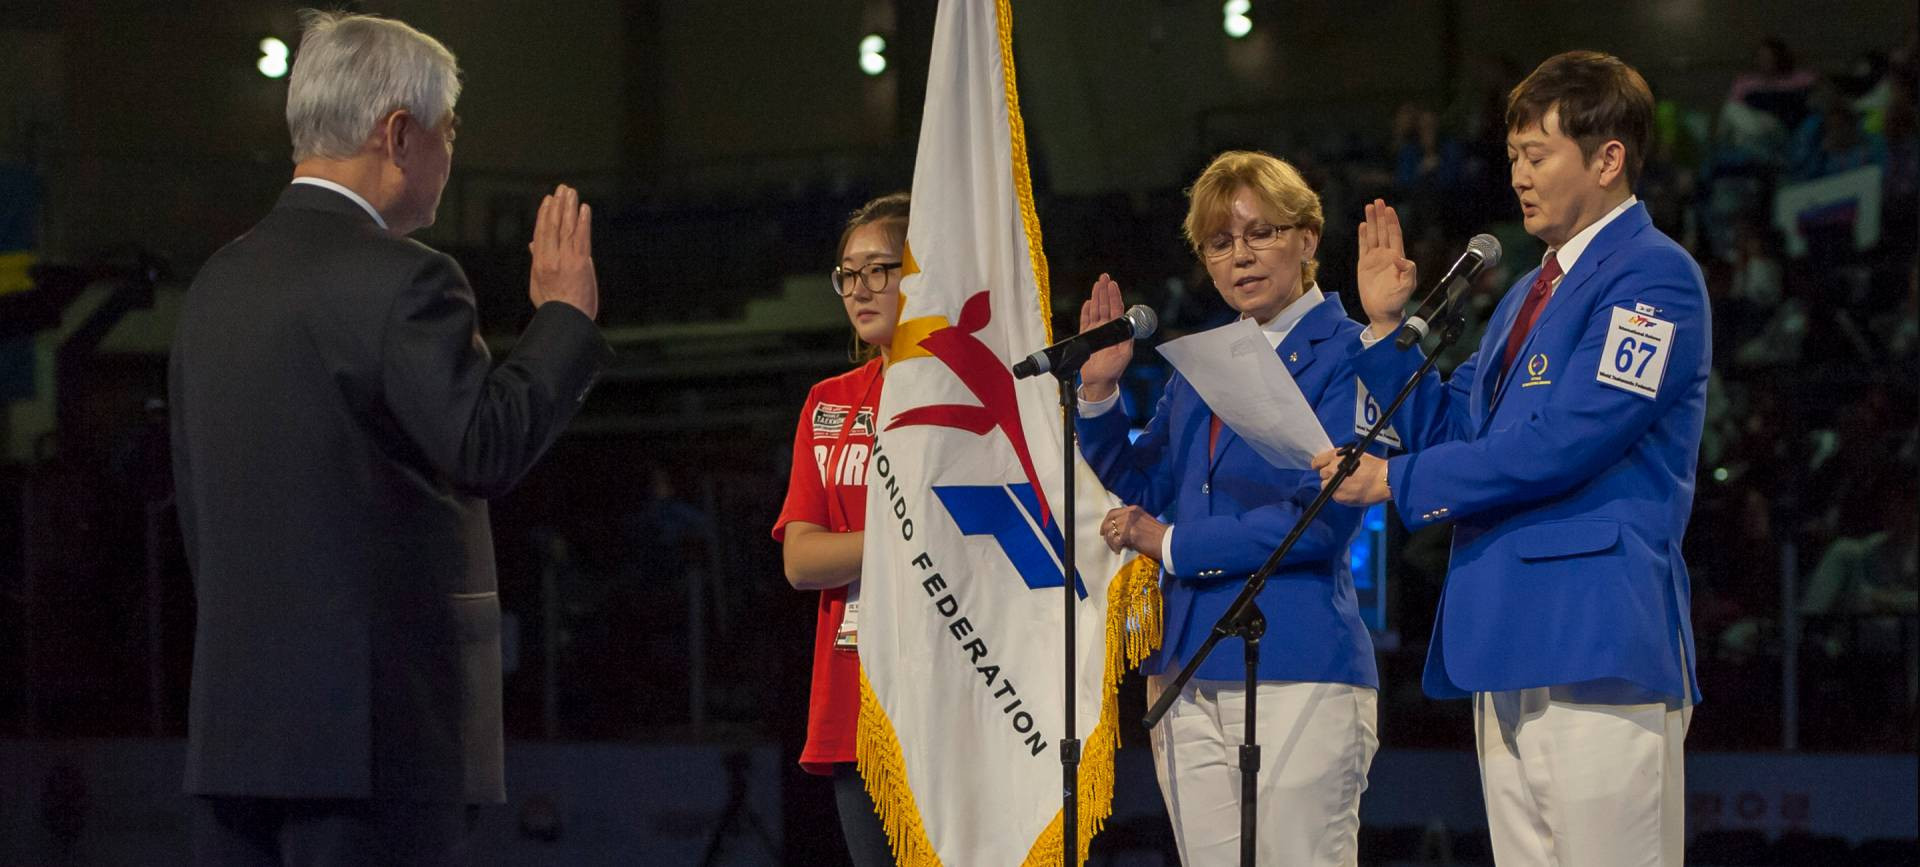 Barbara Marian has been appointed to the Women in Taekwondo Committee ©Taekwondo Canada/Peter Llewellyn